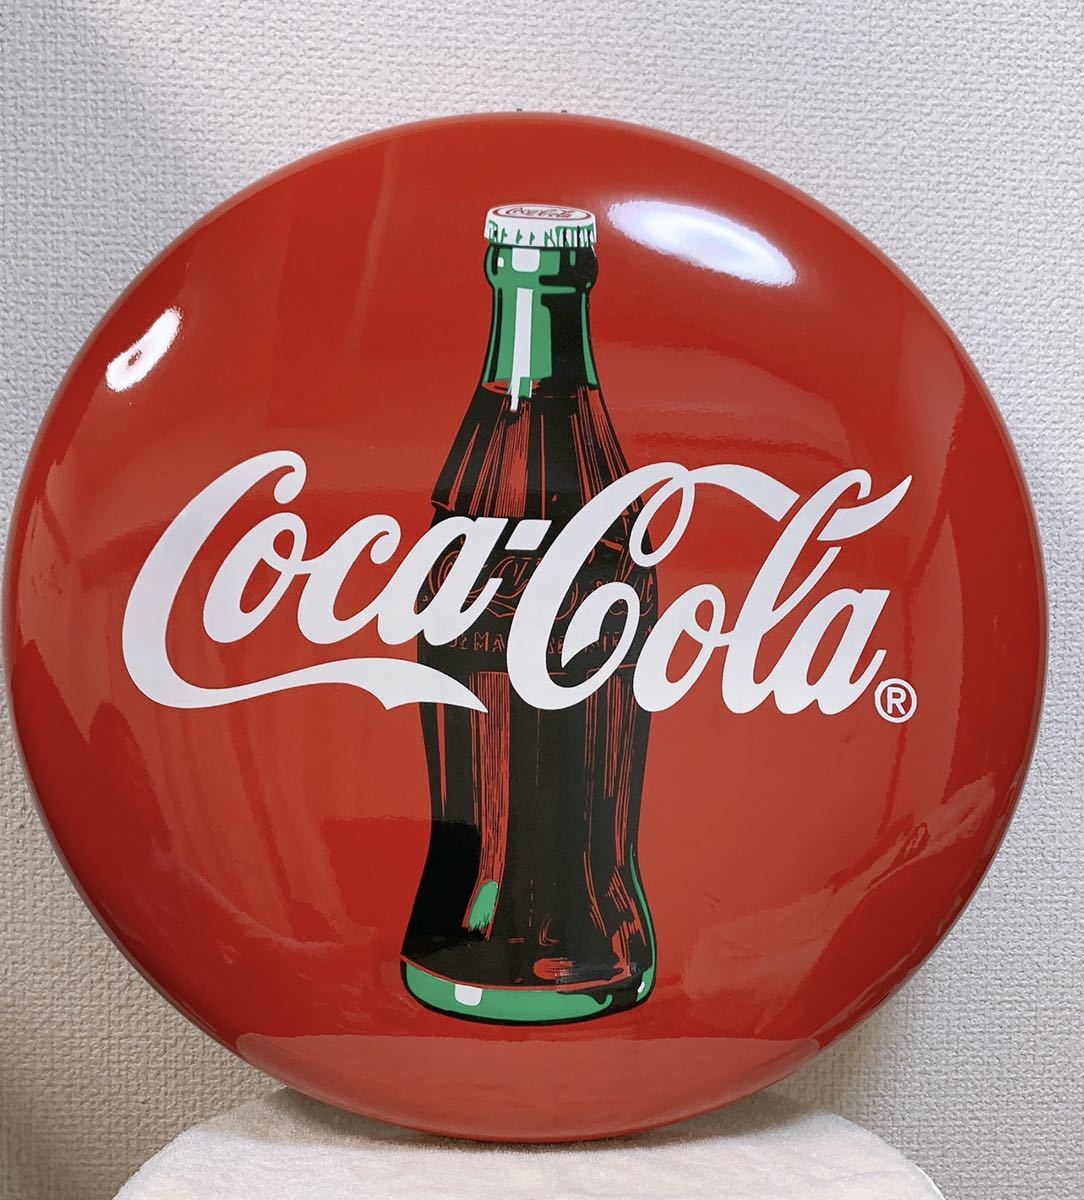 【 Coca - Cola 】コカコーラ ★ ヴィンテージ ★ 35年程前に購入 ★ Penny Japan ★ 送料無料 ★